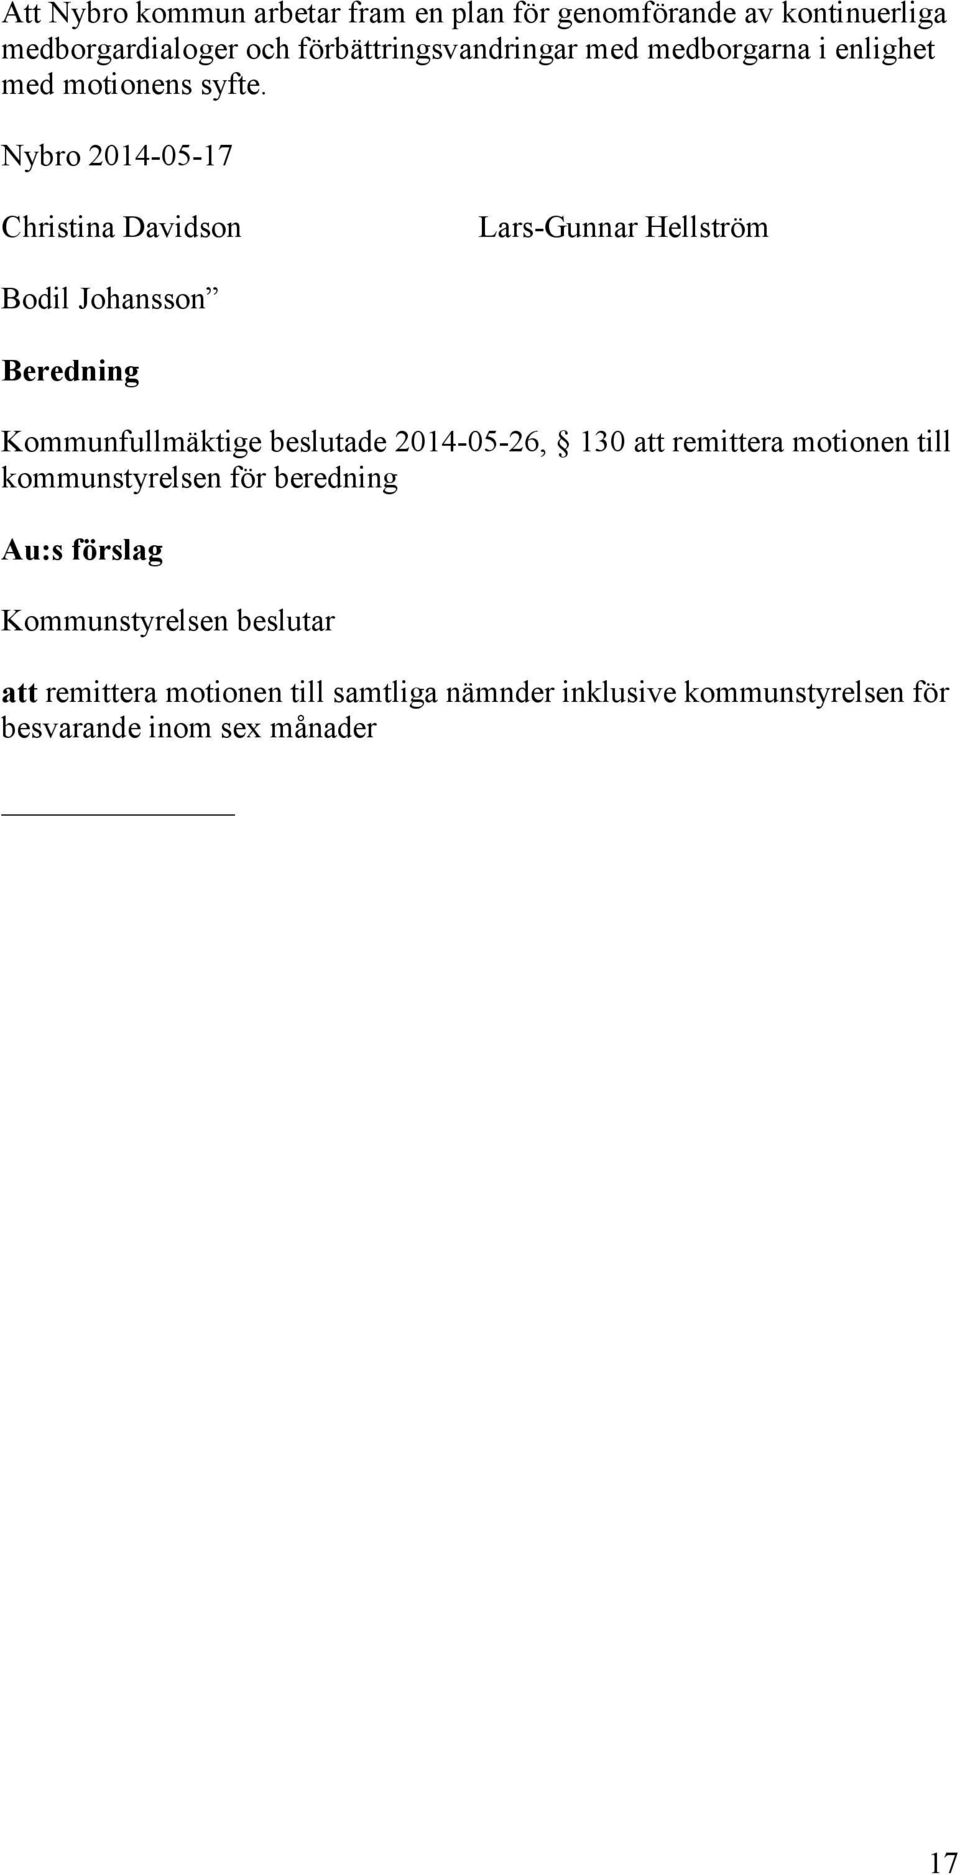 Nybro 2014-05-17 Christina Davidson Lars-Gunnar Hellström Bodil Johansson Beredning Kommunfullmäktige beslutade 2014-05-26,